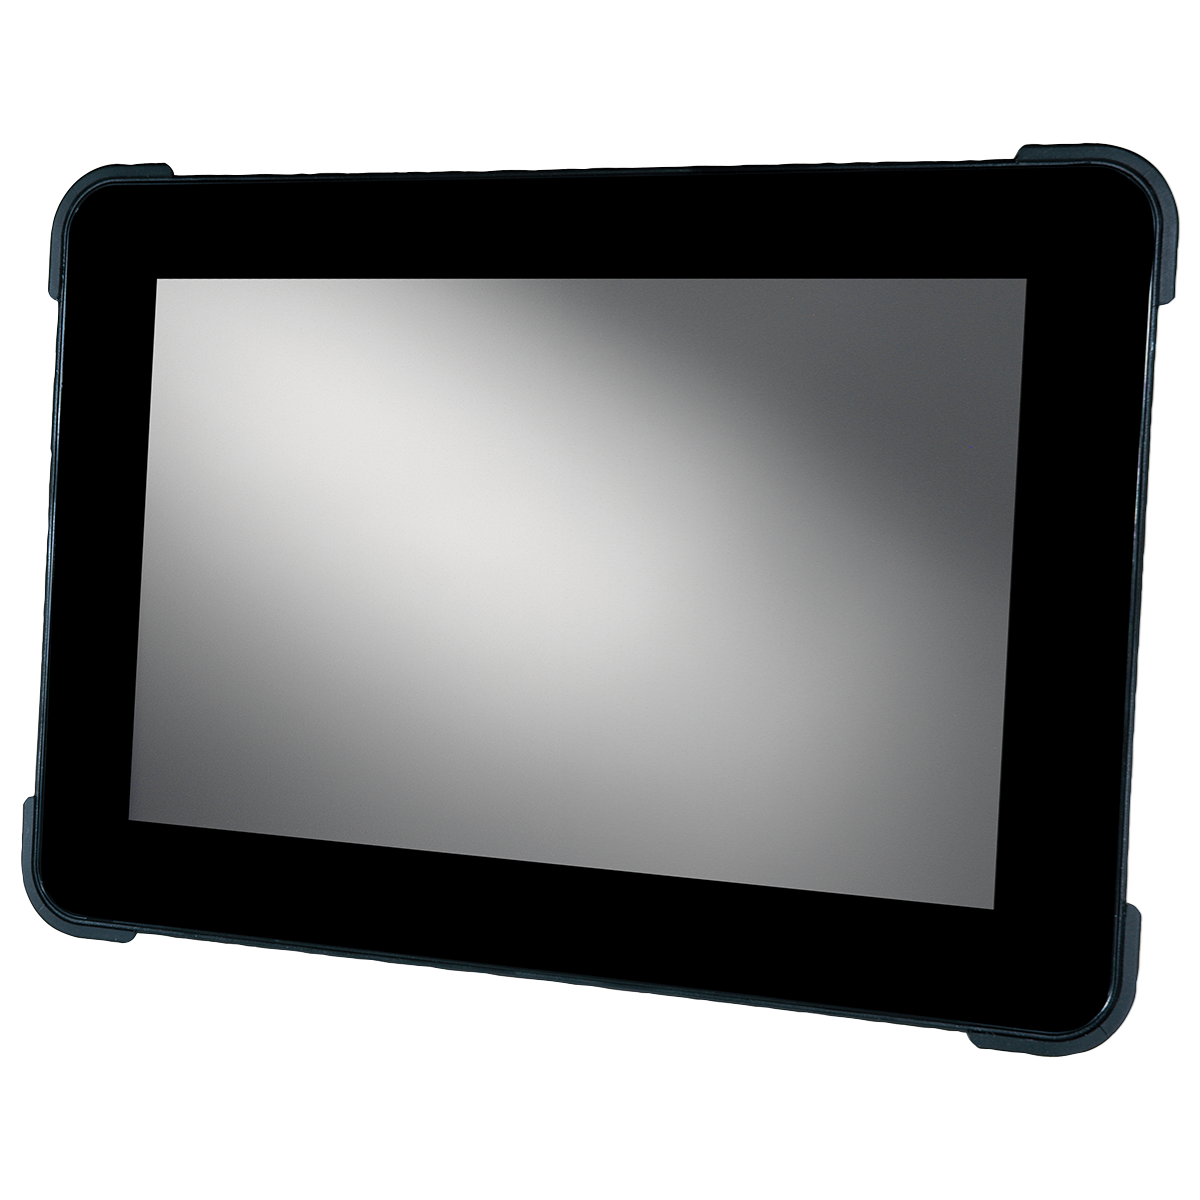 New Hisense HM618 Tablet Released